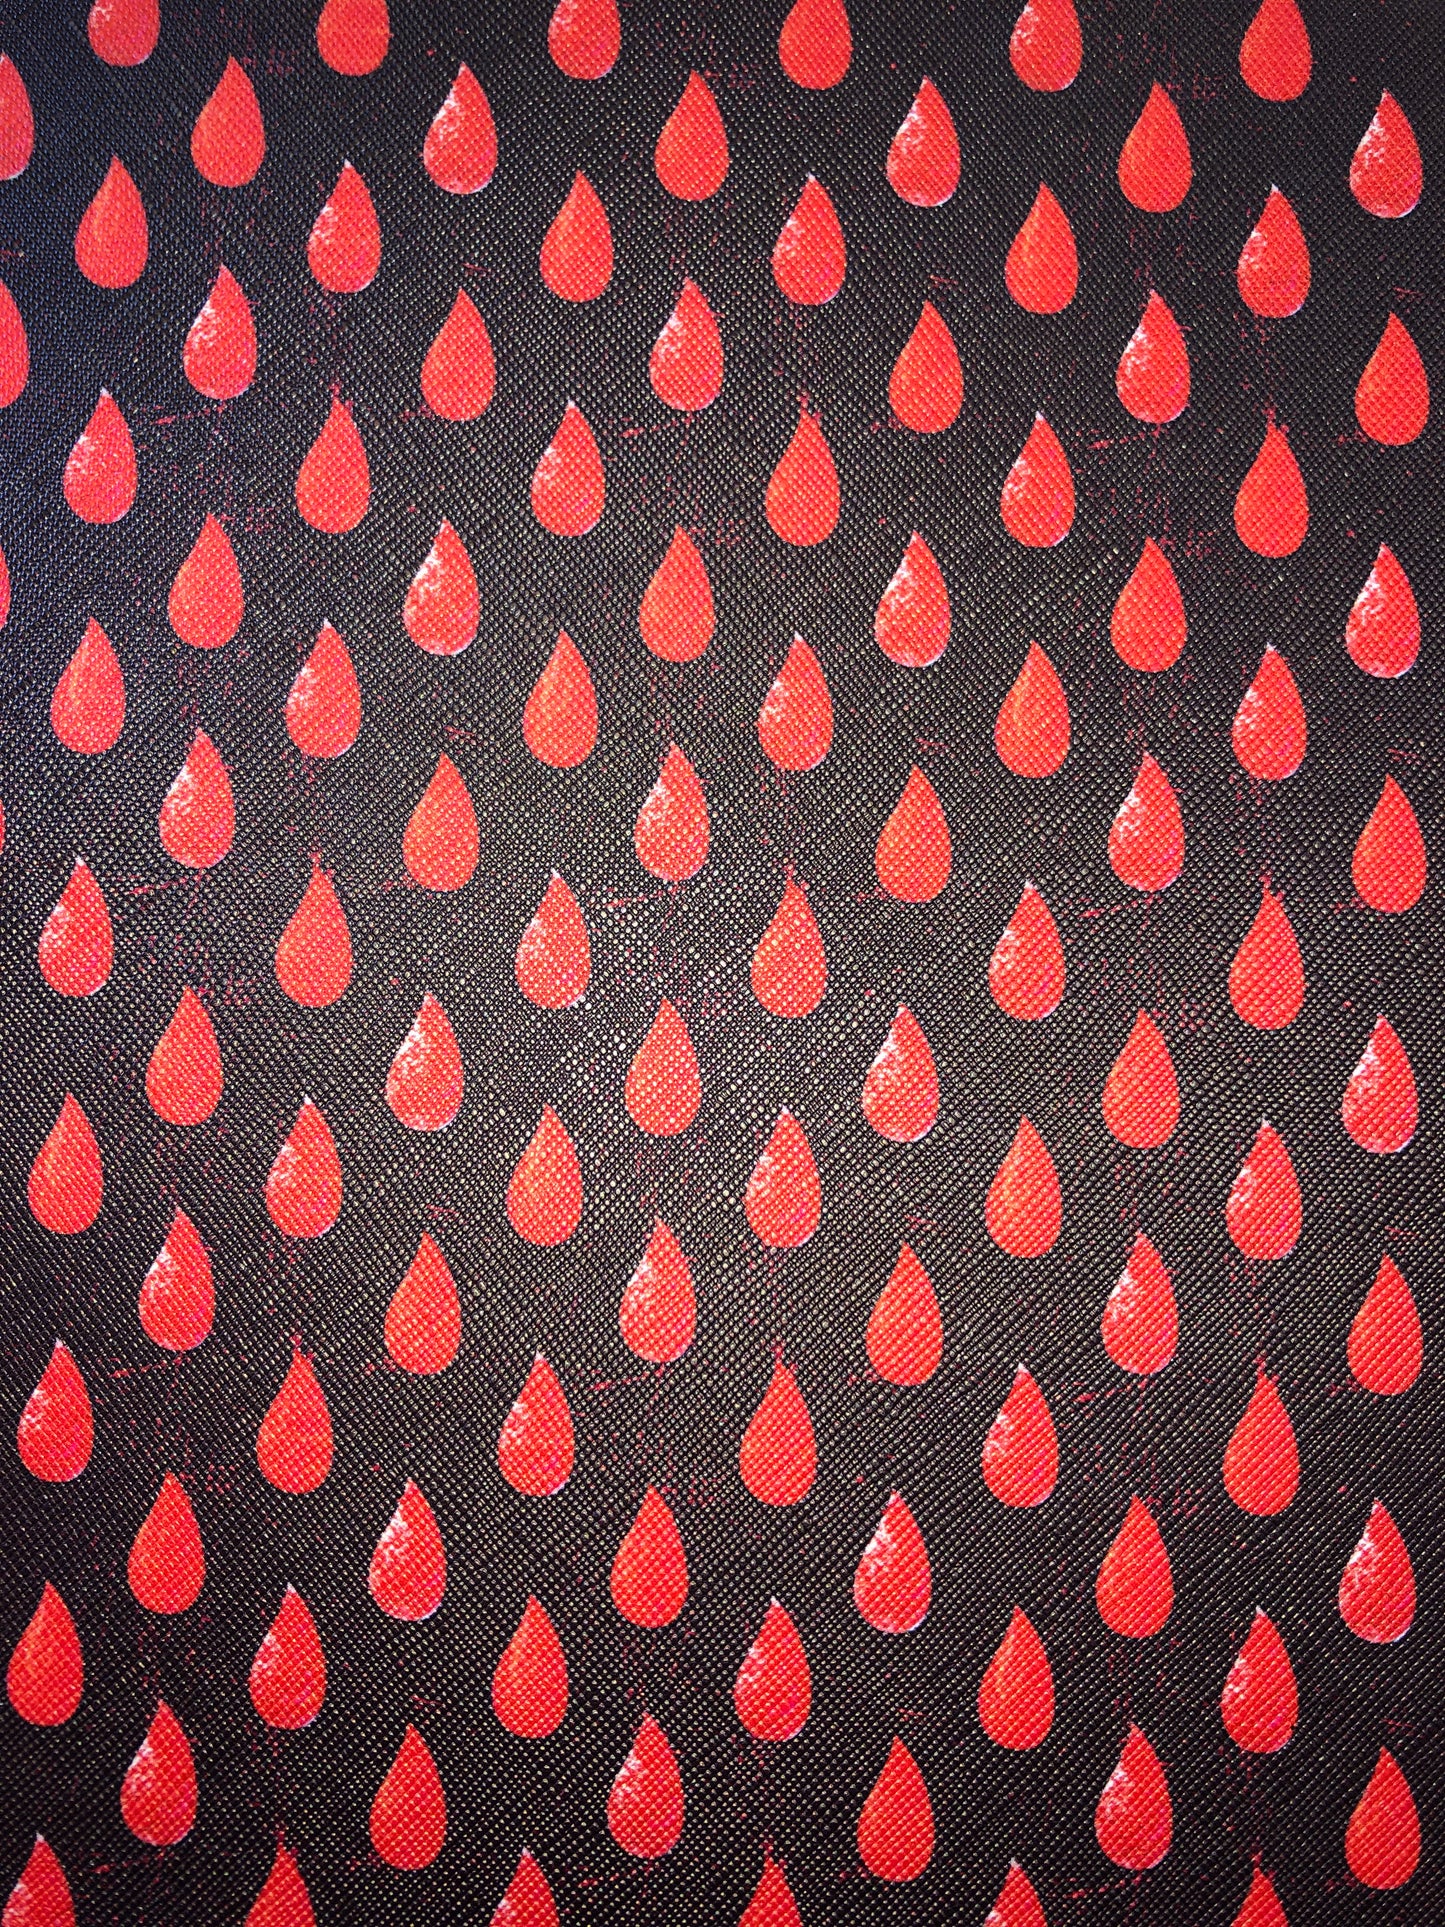 Blood Drops Faux leather